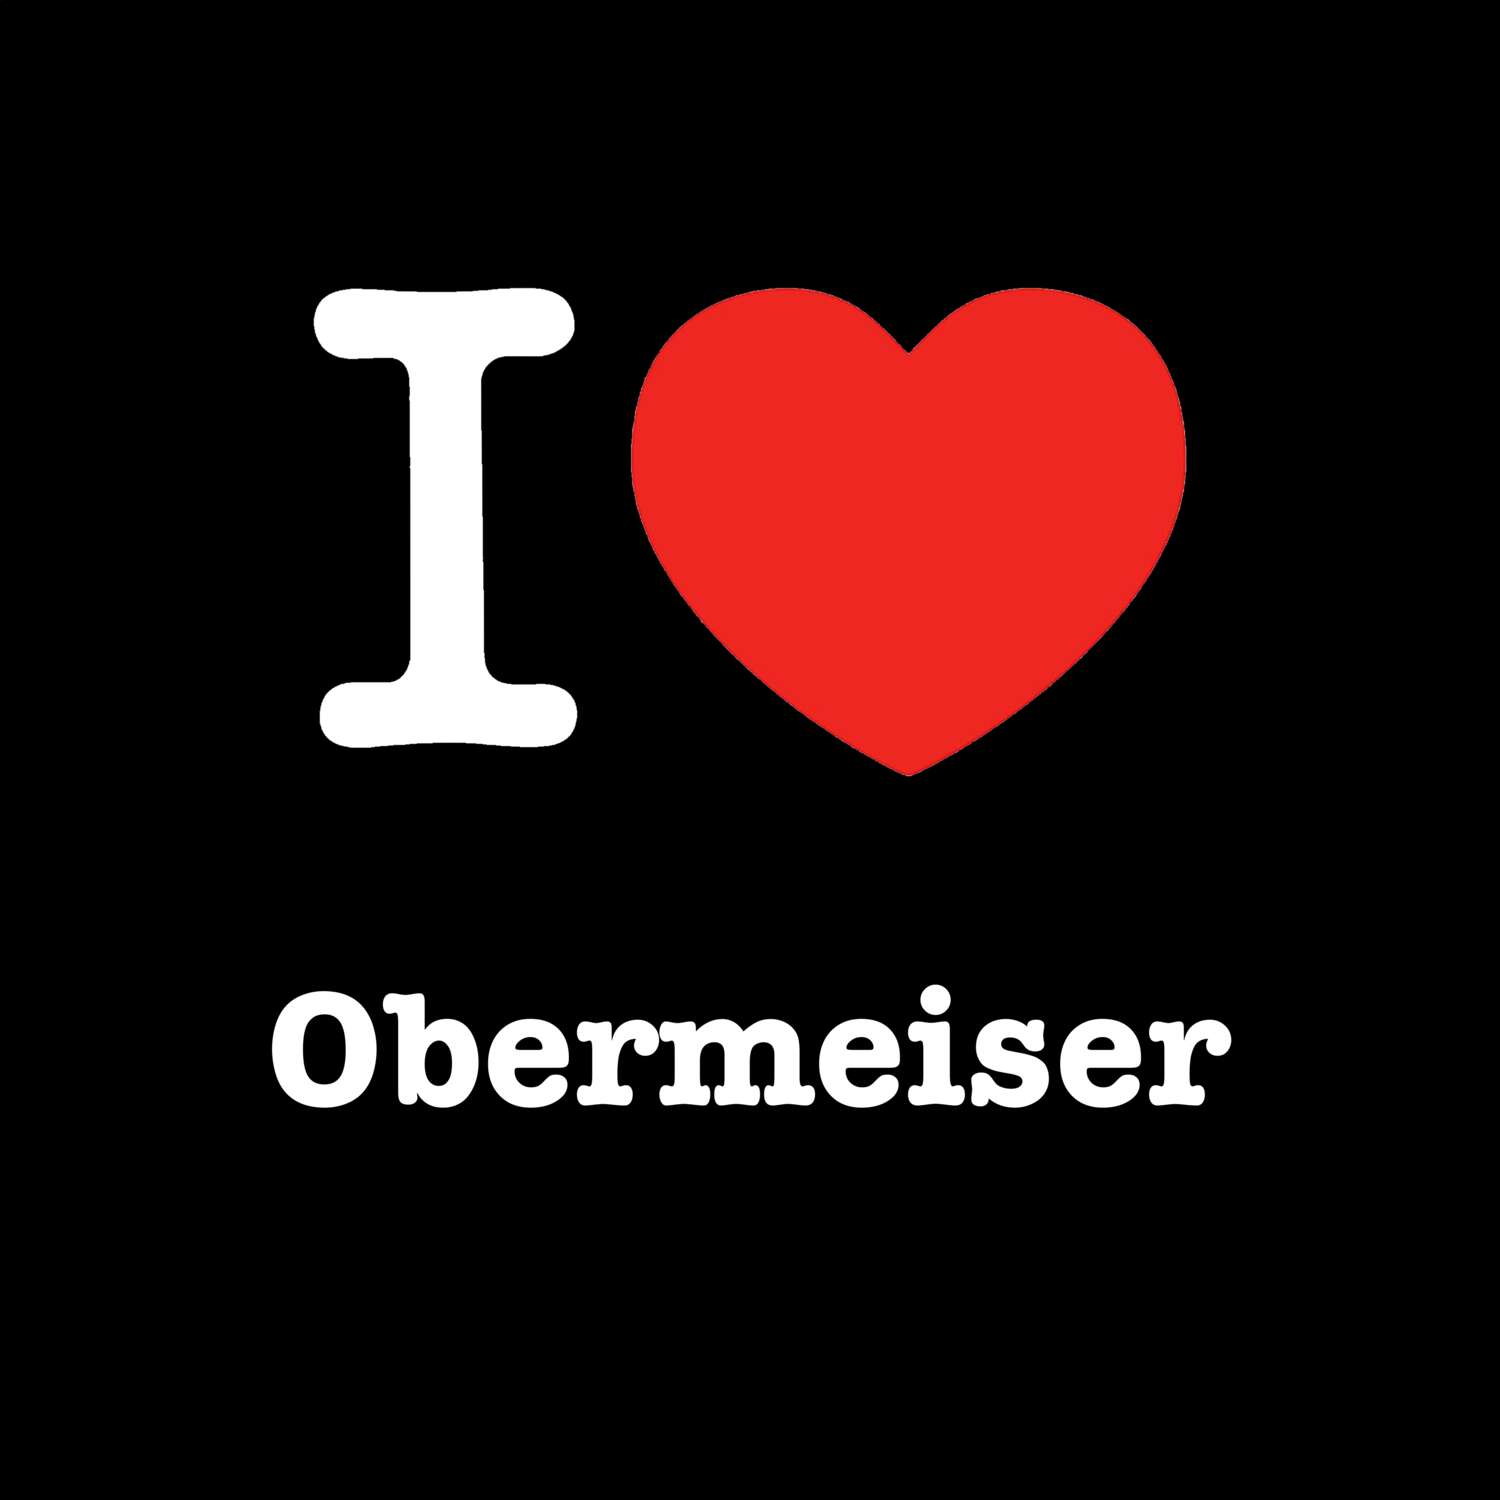 Obermeiser T-Shirt »I love«